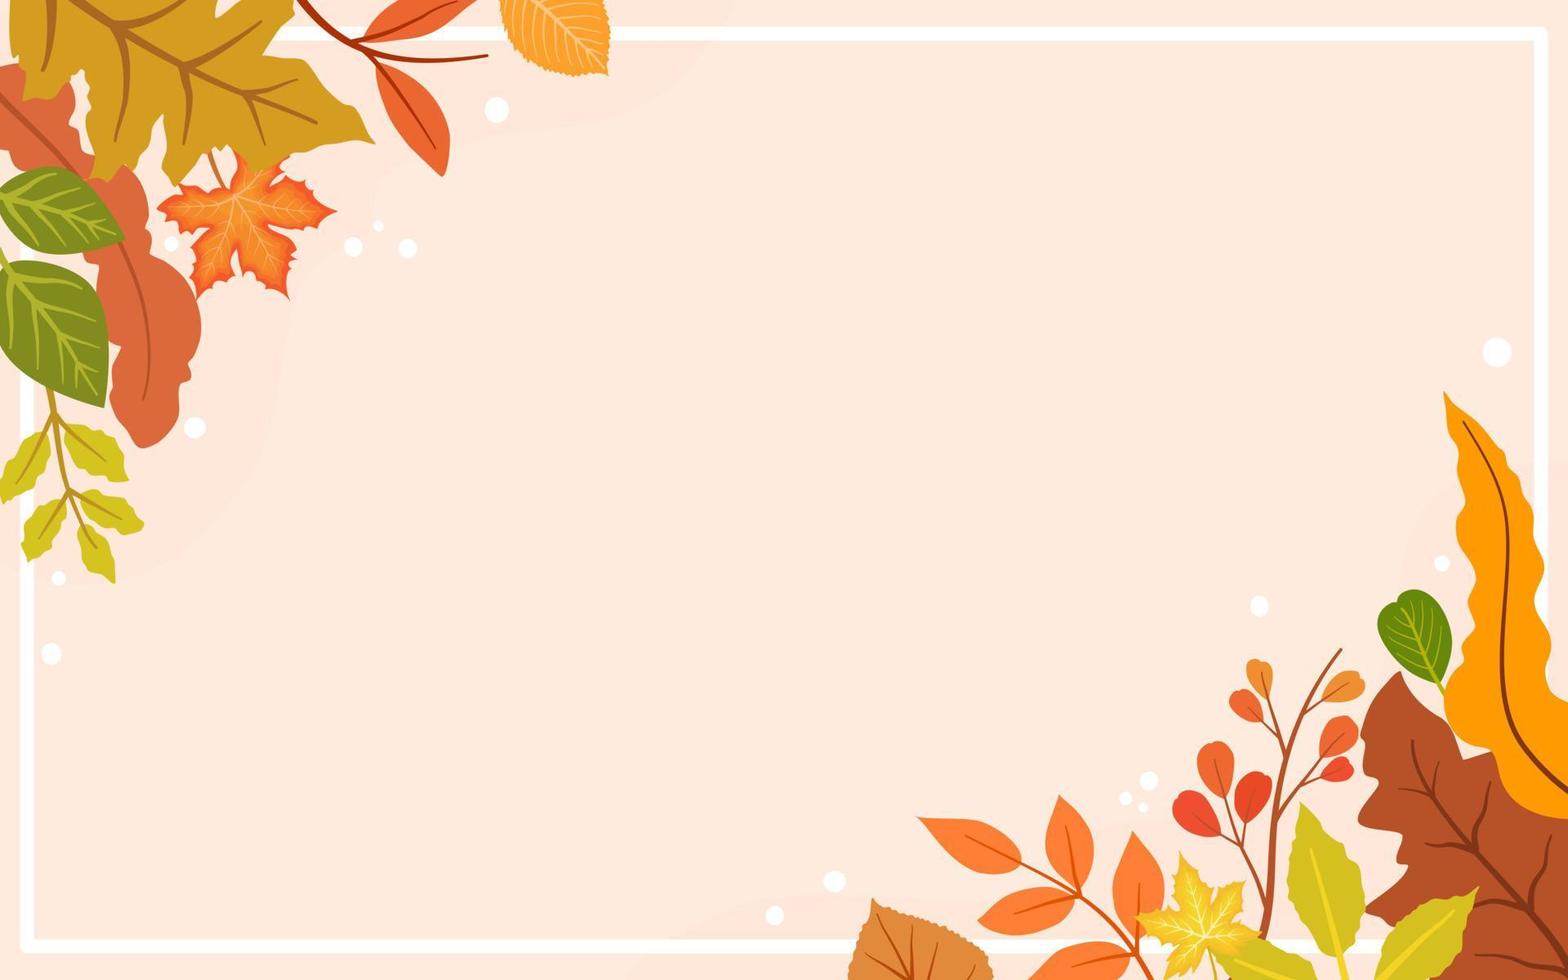 Autumn Leaves Frame Background vector